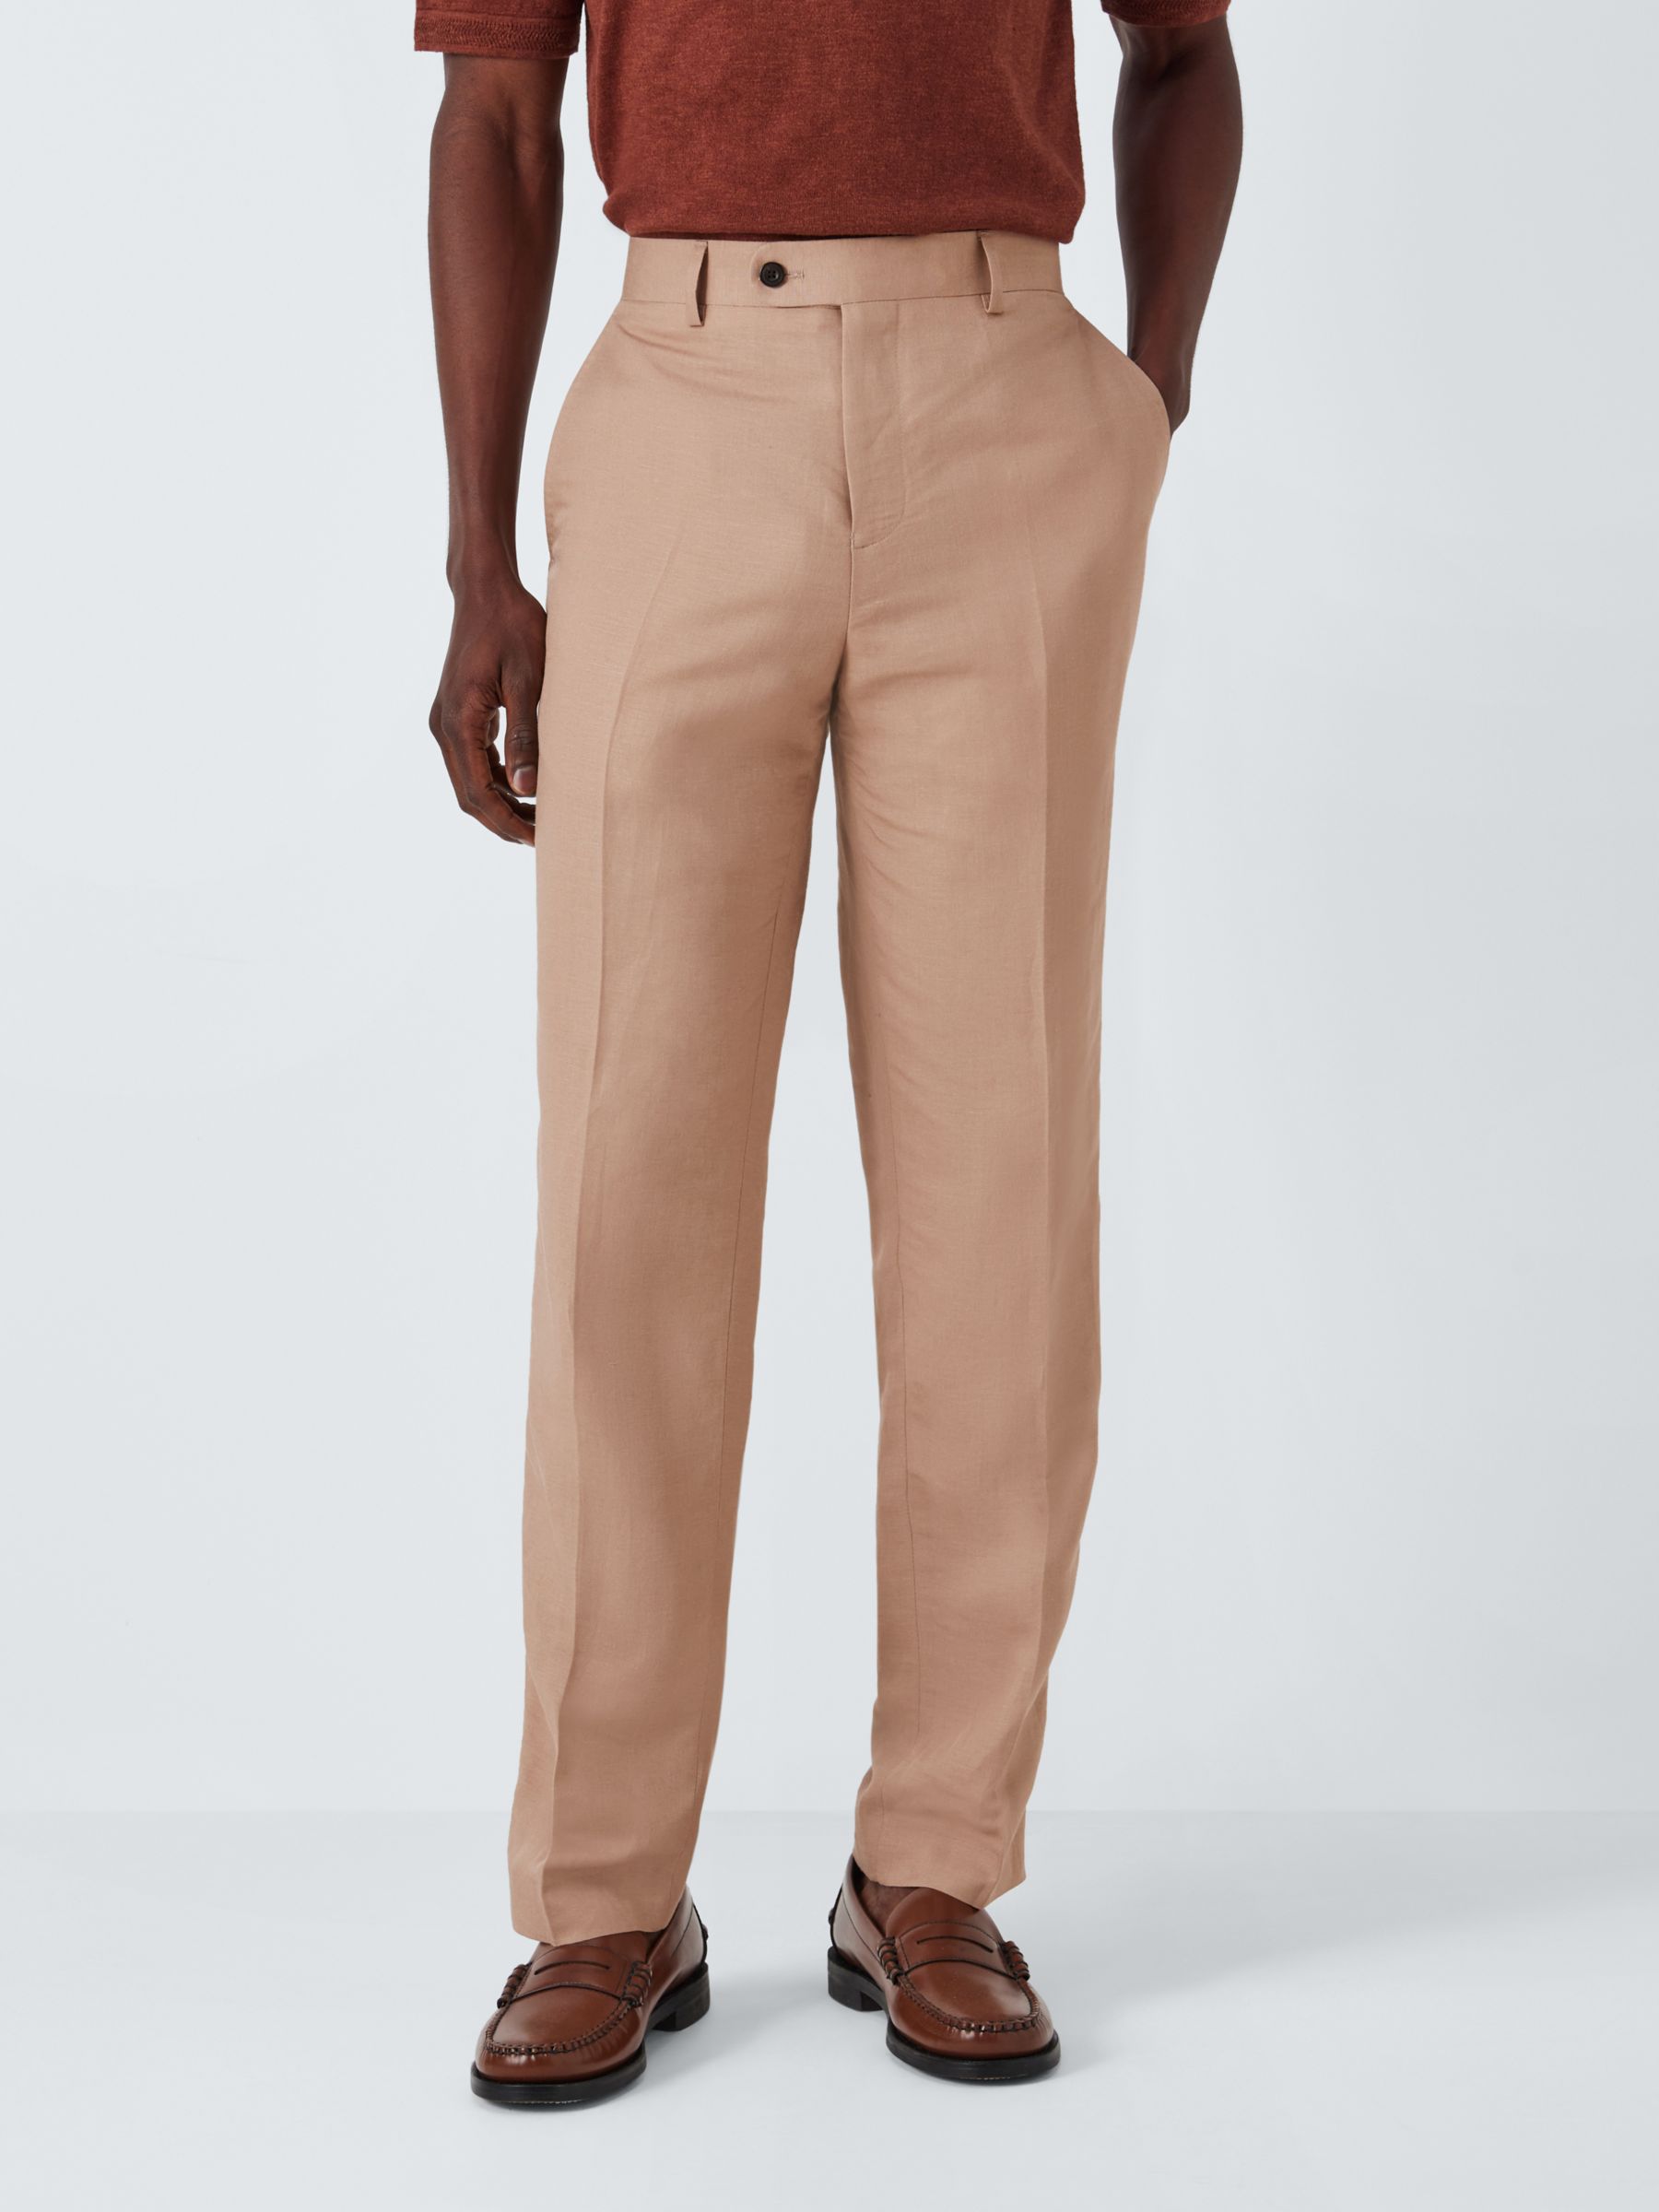 John Lewis Ashwell Linen Blend Regular Fit Suit Trousers, Sand, 38R